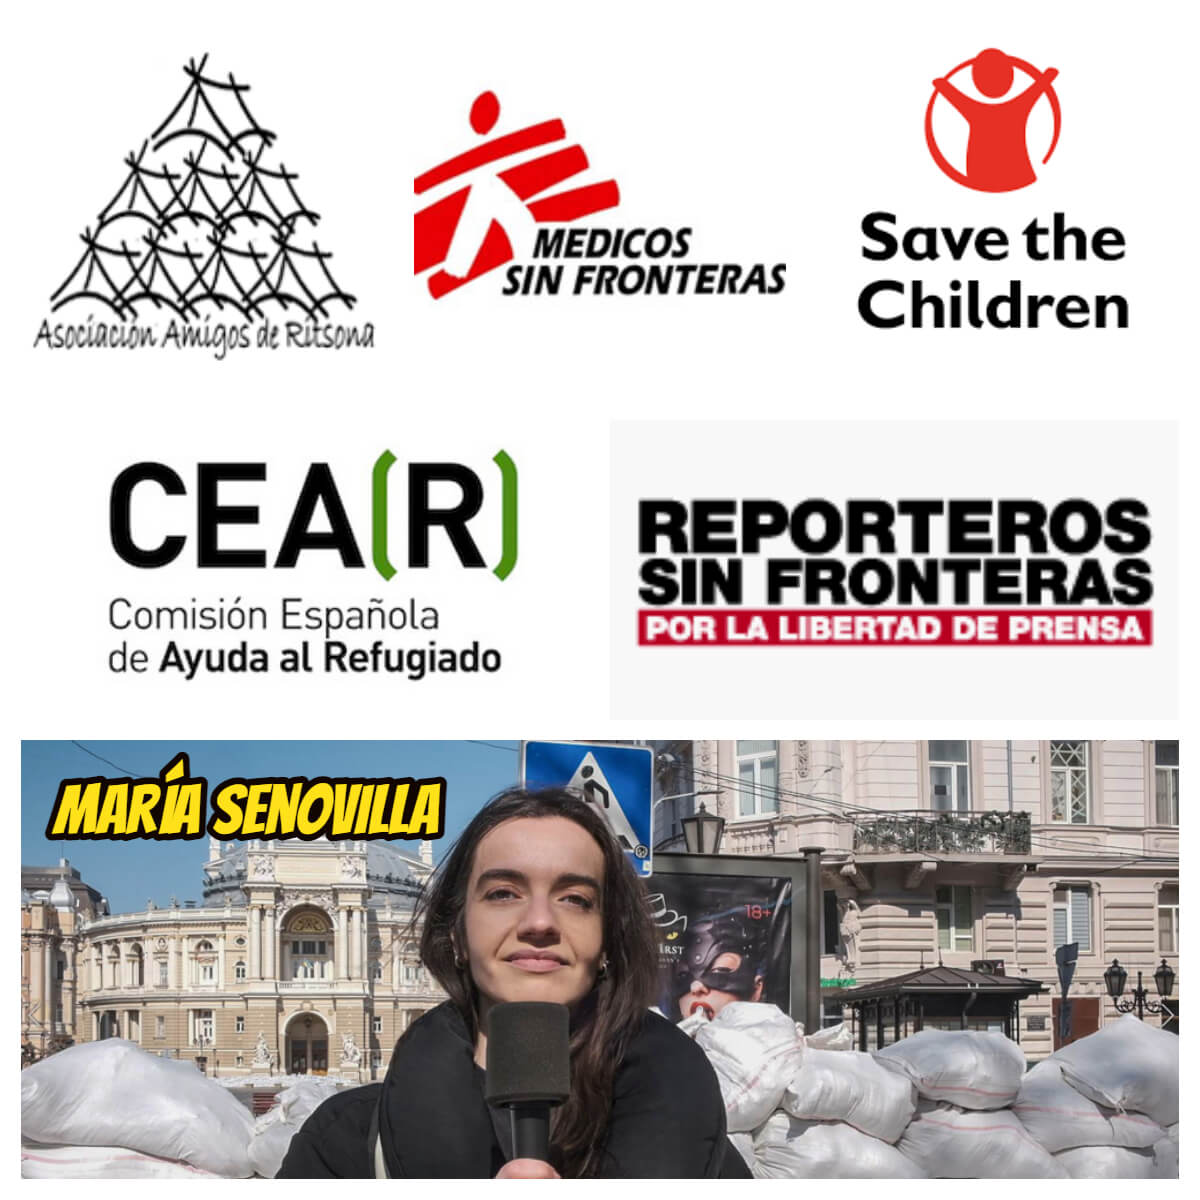 Crisis_de_refugiados-la_gran_travesia-maria_senovilla-cear-reporteros_sin_fronteras-save_the_children-radio_free_rock